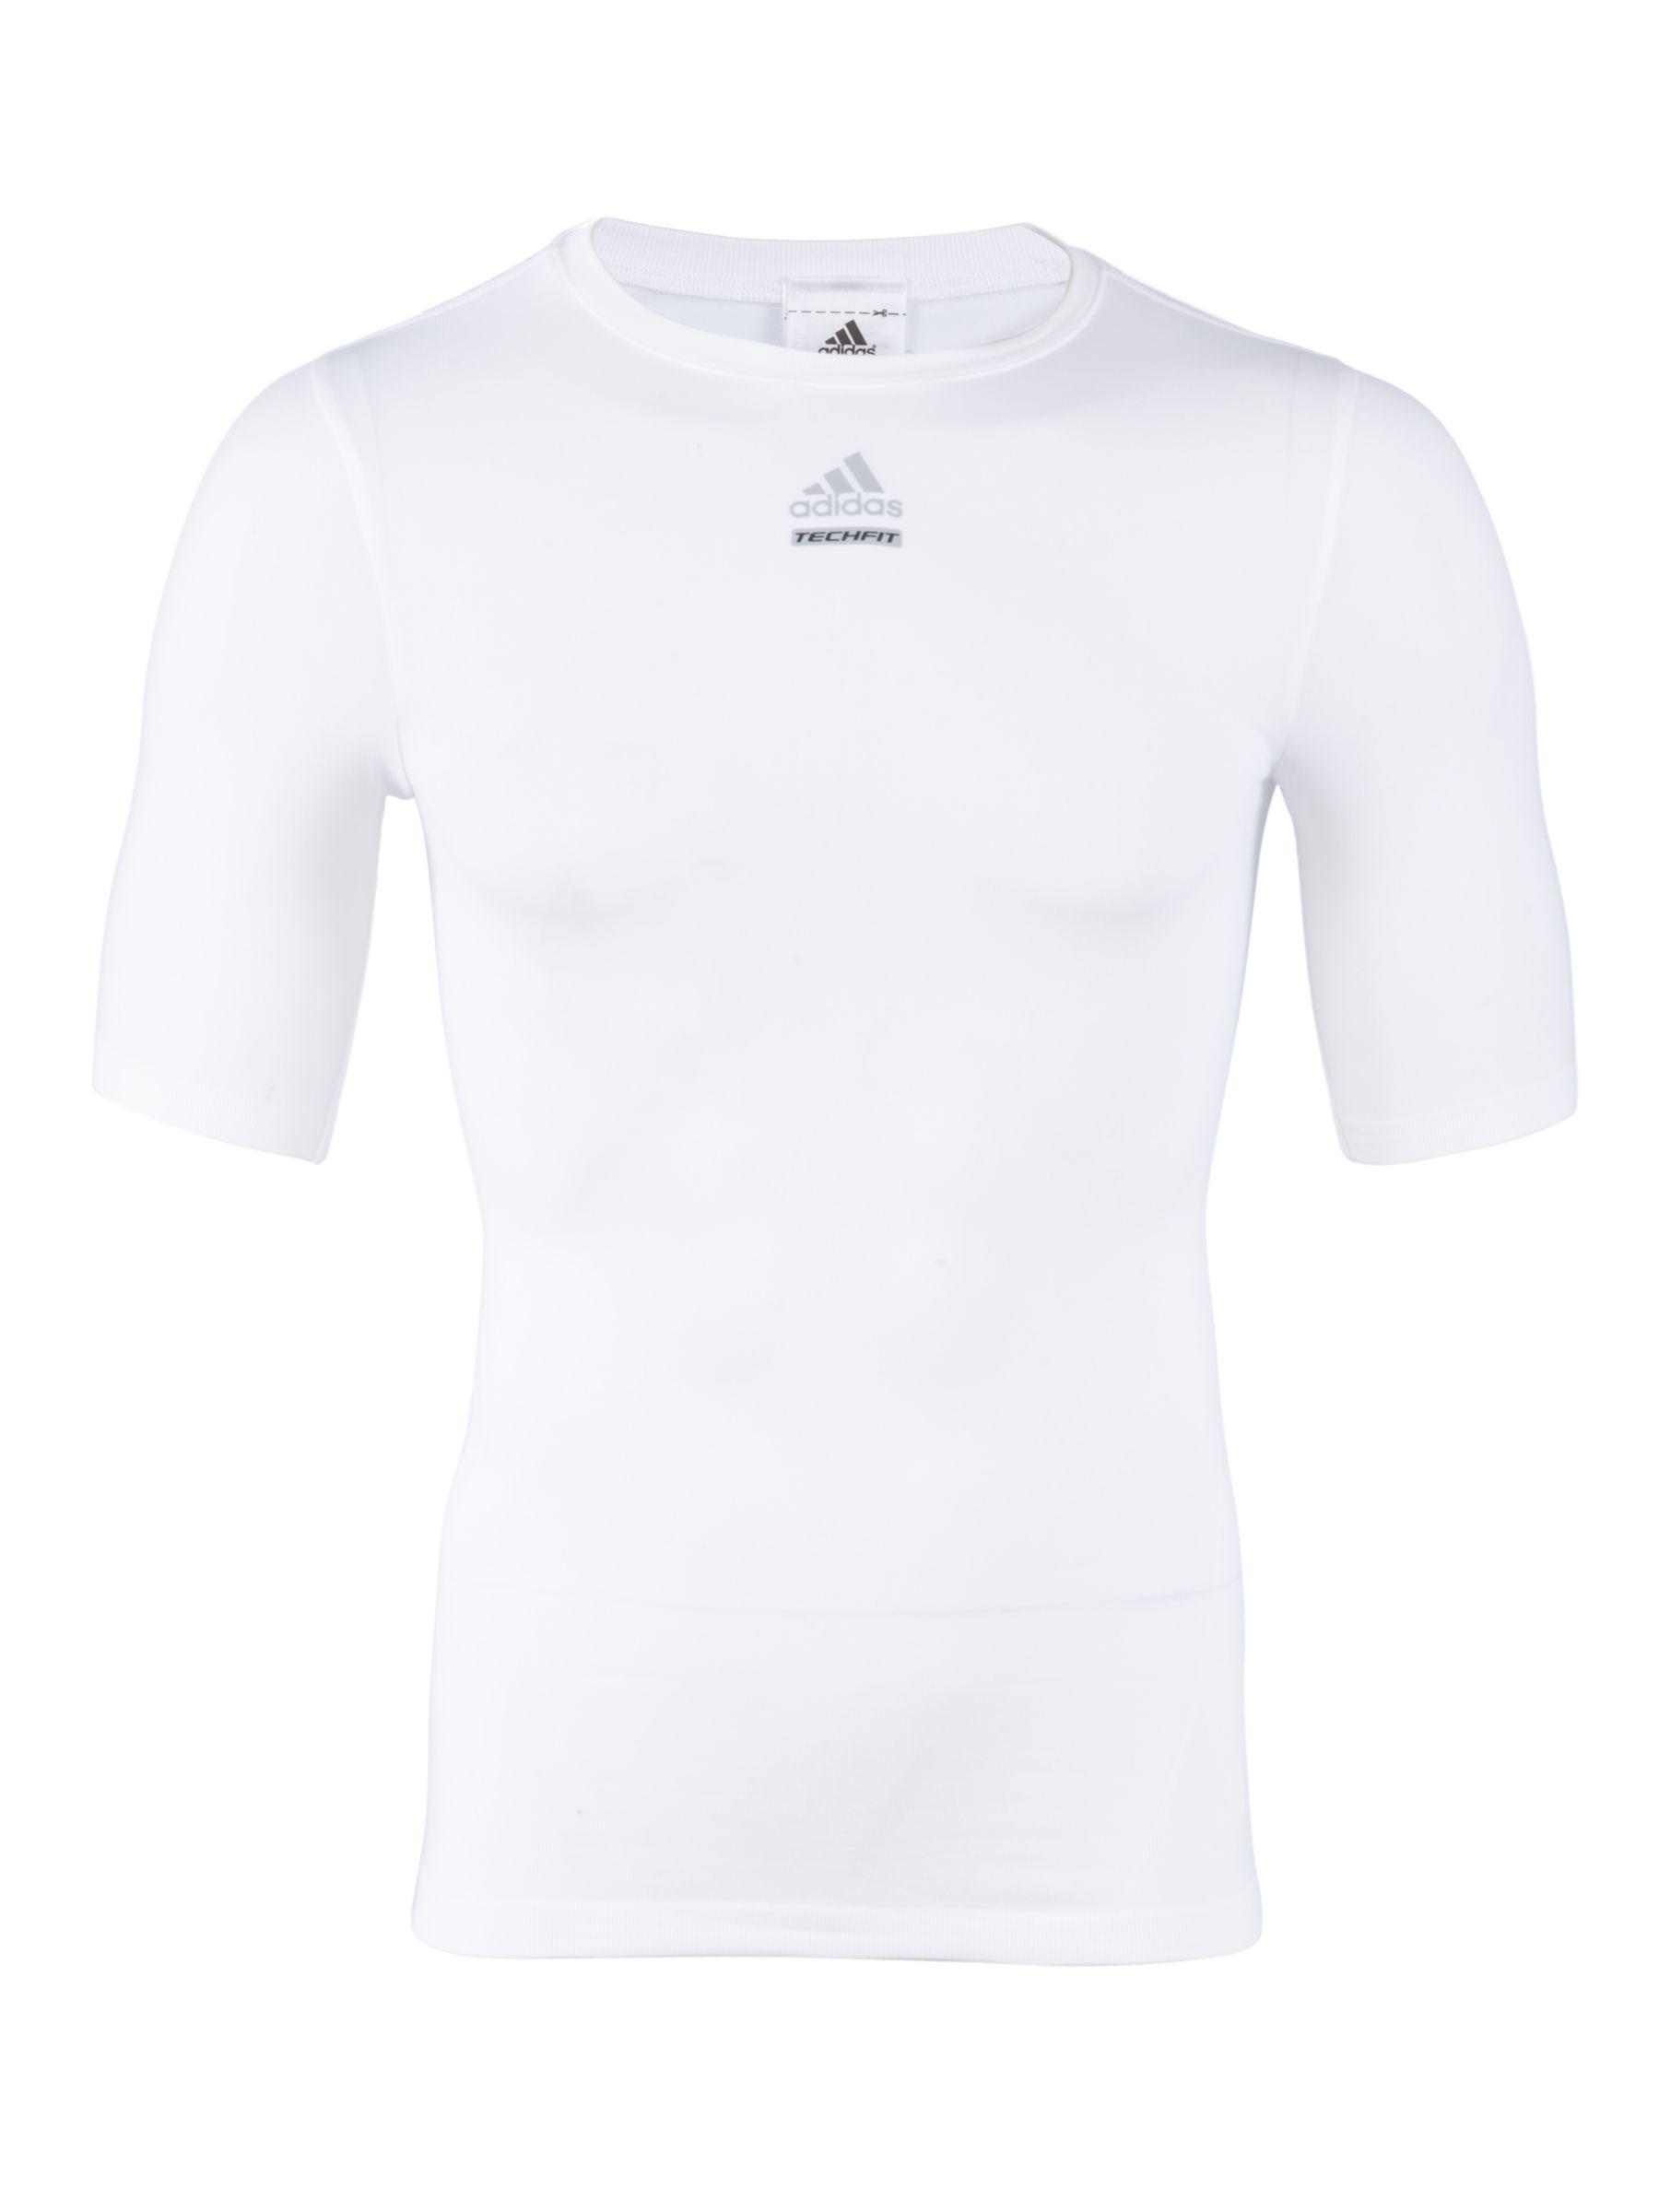 Techfit Short Sleeve T-Shirt, White